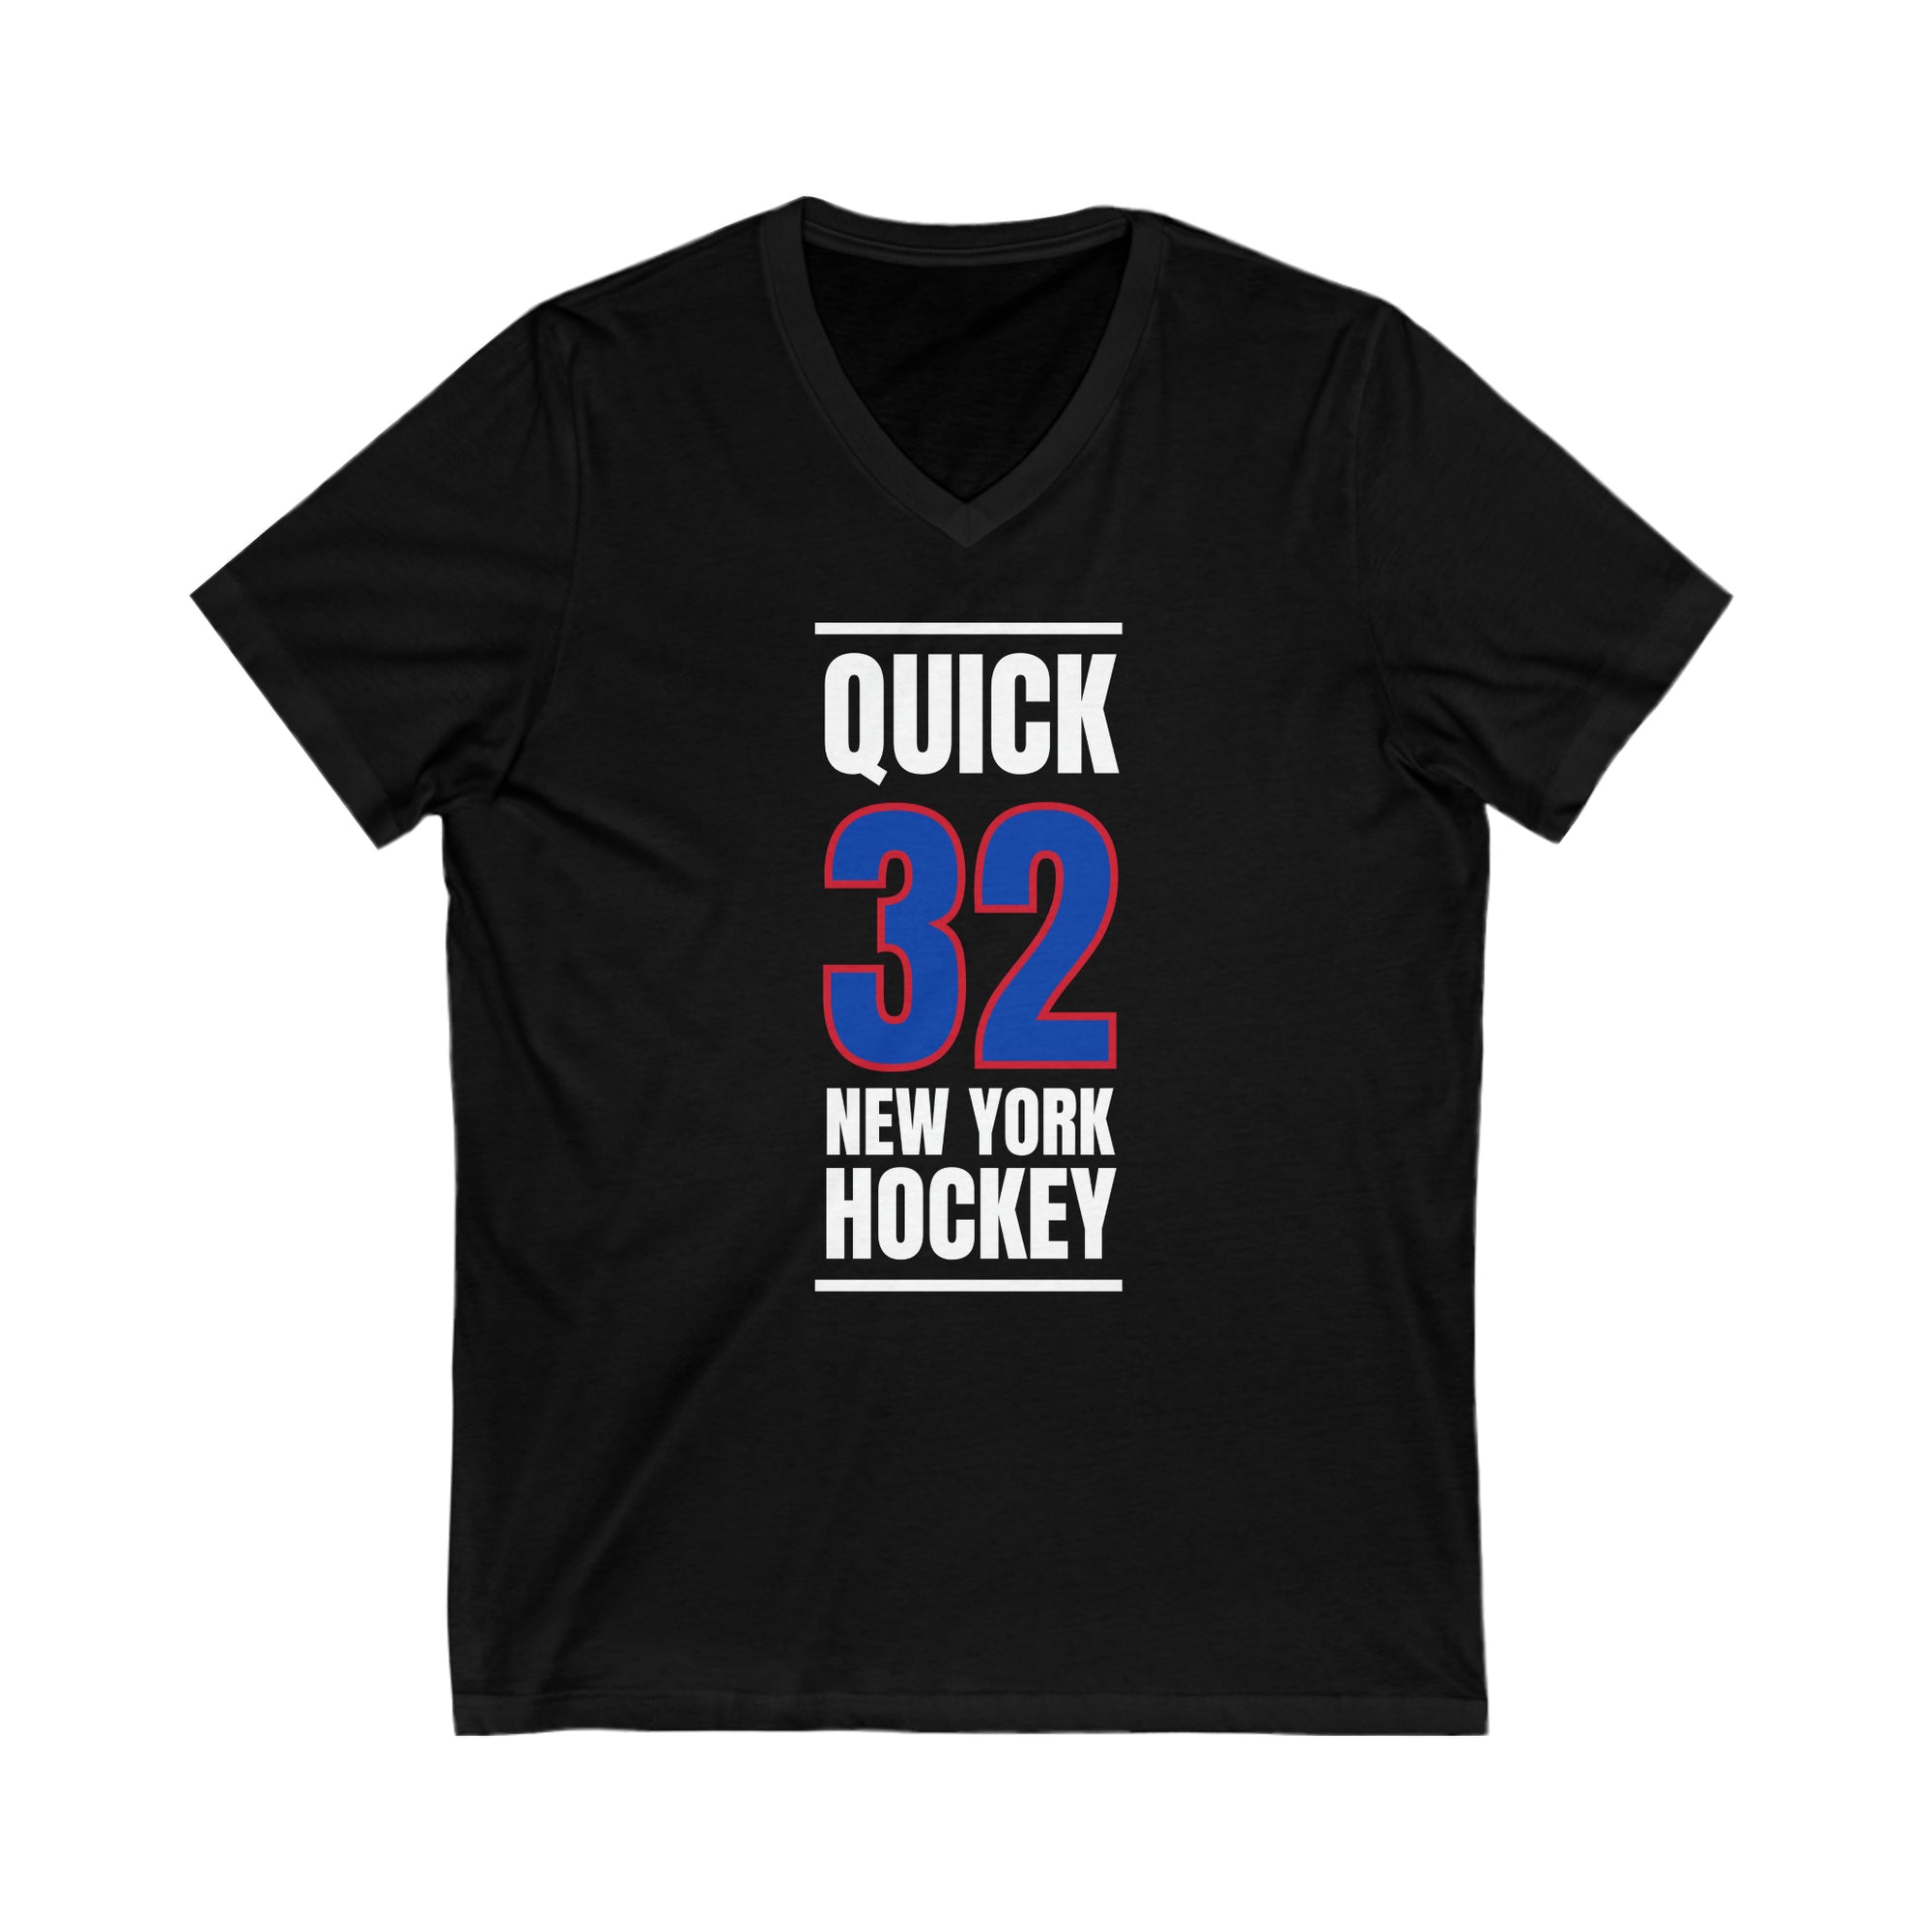 Quick 32 New York Hockey Royal Blue Vertical Design Unisex V-Neck Tee